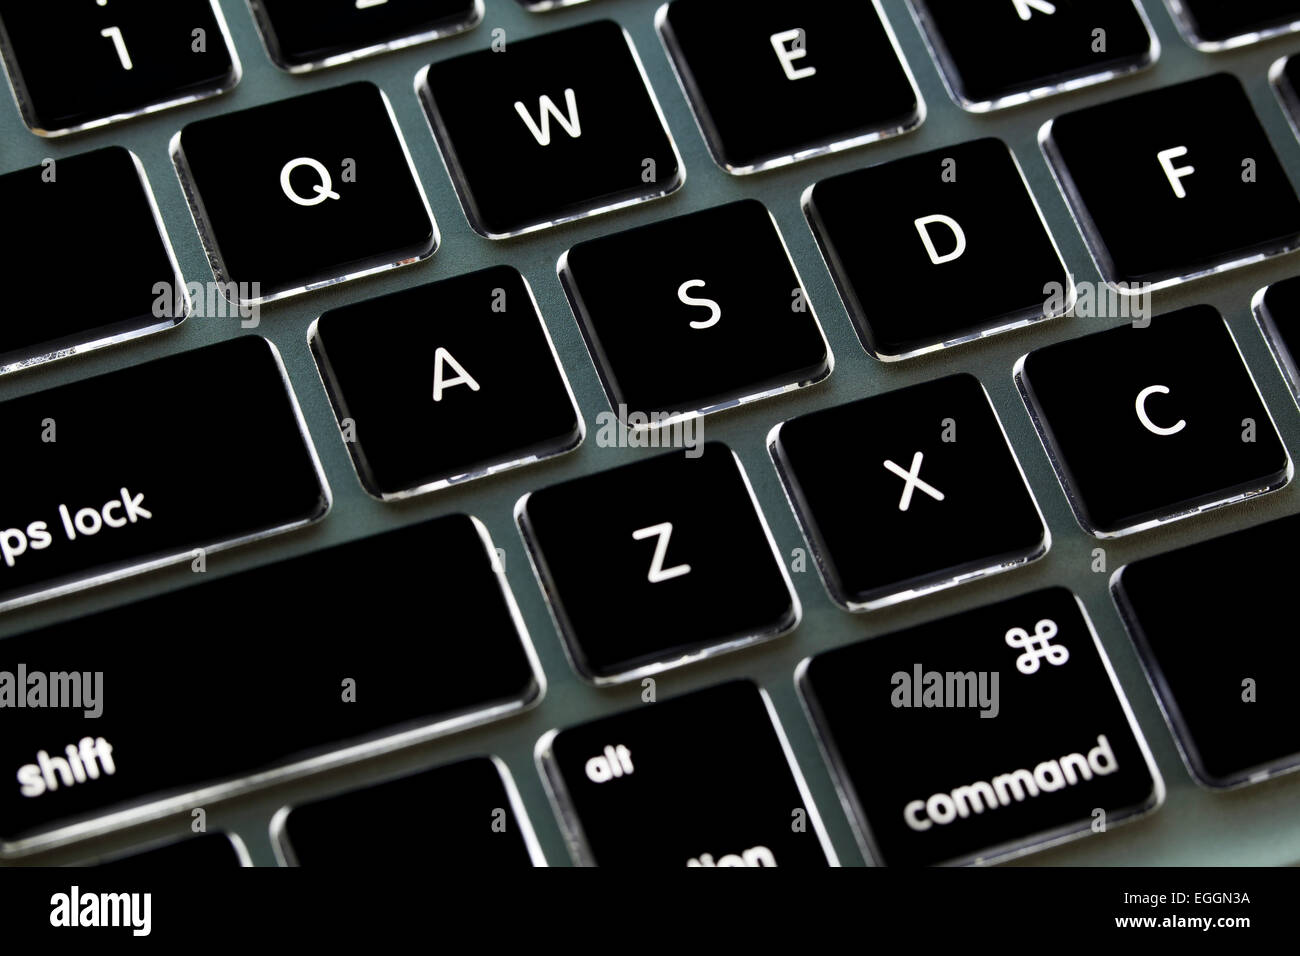 Illuminated Apple Macbook Pro keyboard - USA Stock Photo